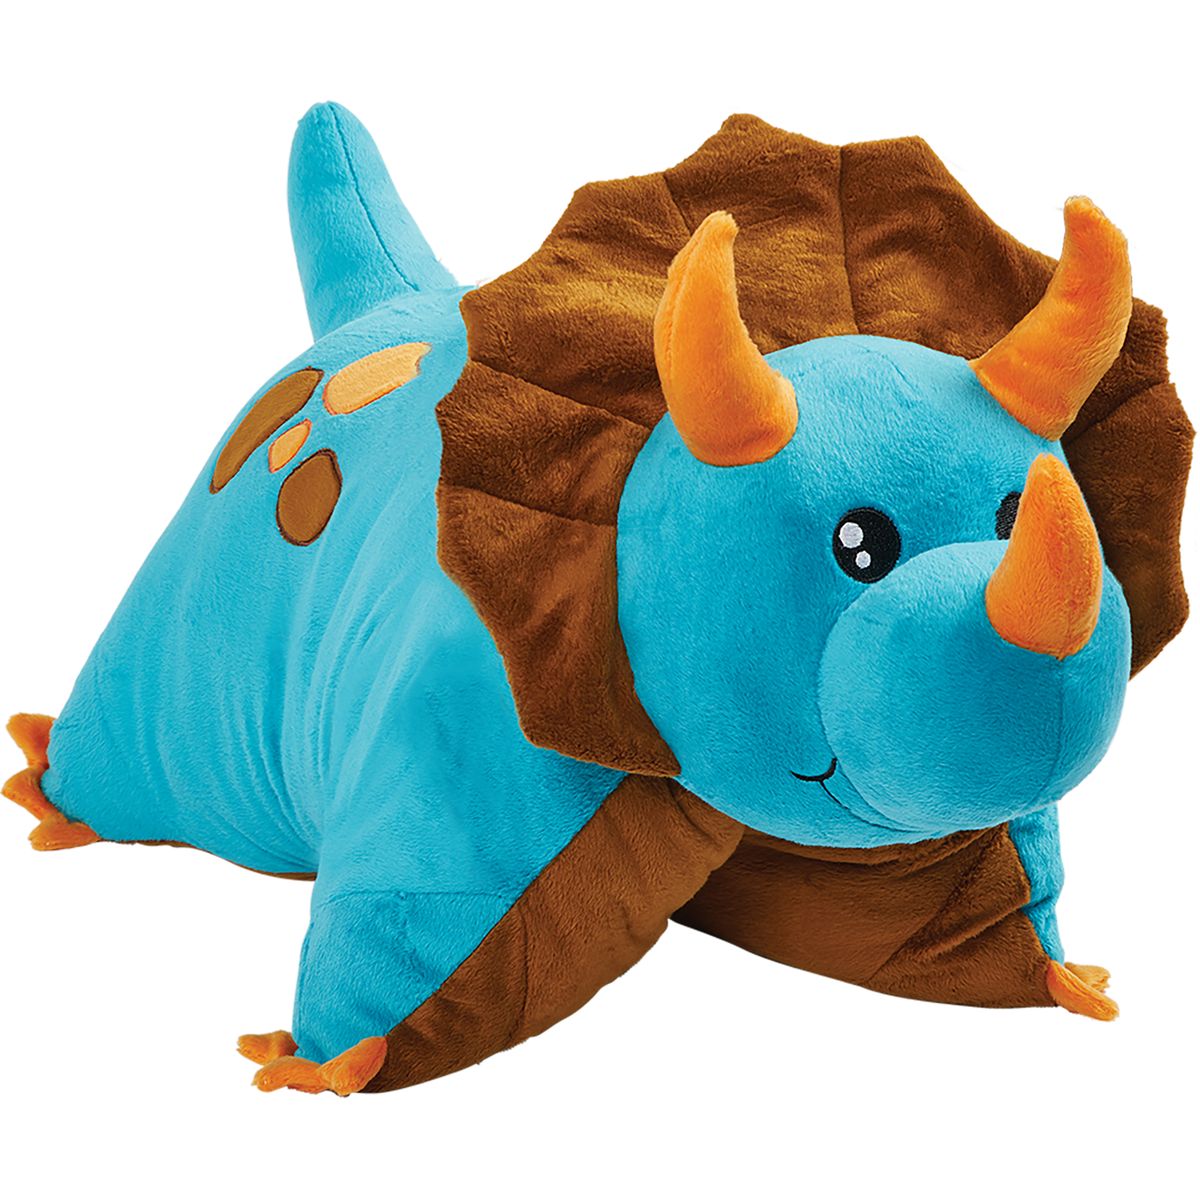 RDY 送料無料 Pillow Pets 18インチ ブルーダイナソーピロー ぬいぐるみ ペットのぬいぐるみ 楽天海外通販 Pillow Pets 18 Blue Dinosaur Pillow Stuffed Animal Plush Toy Pet